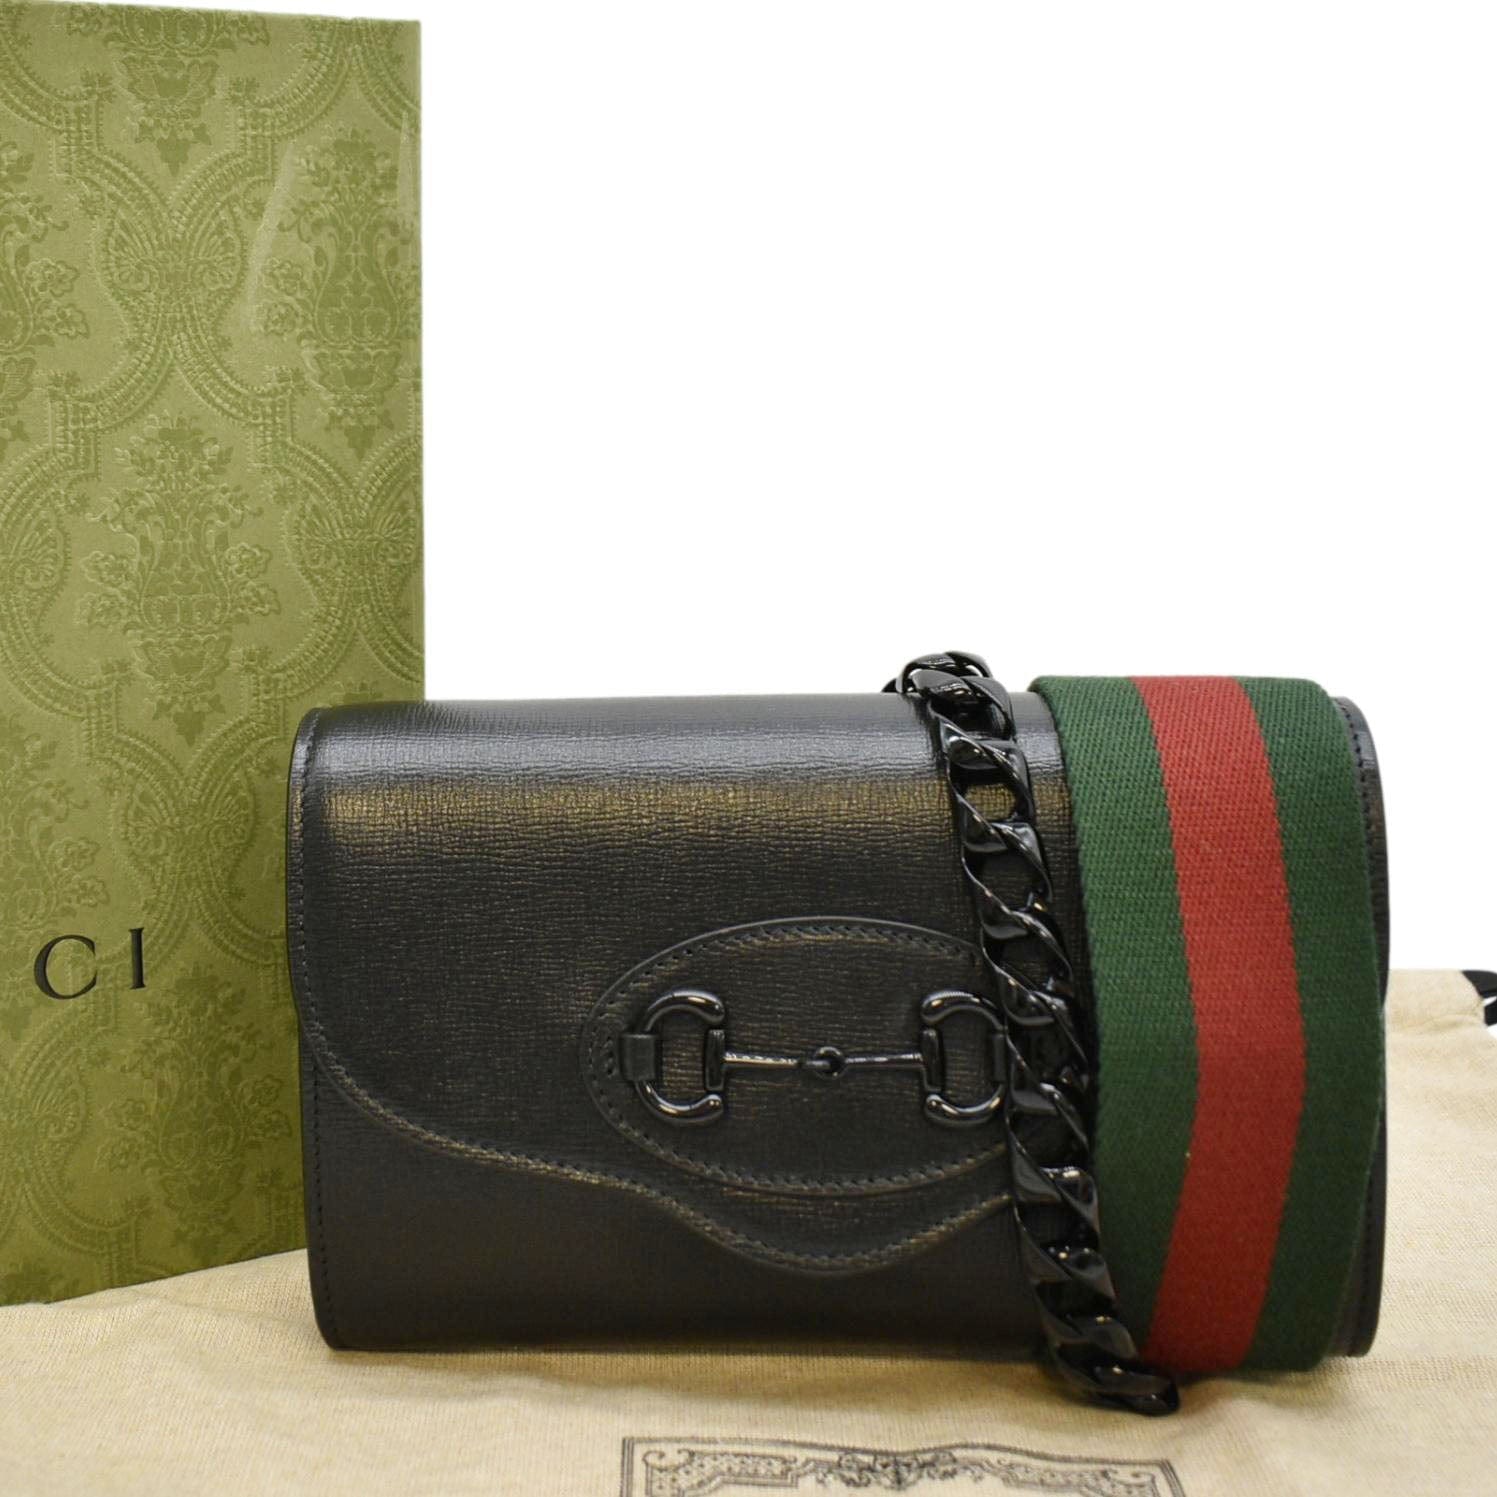 Gucci Horsebit 1955 Mini Leather Crossbody Bag in Black - Gucci